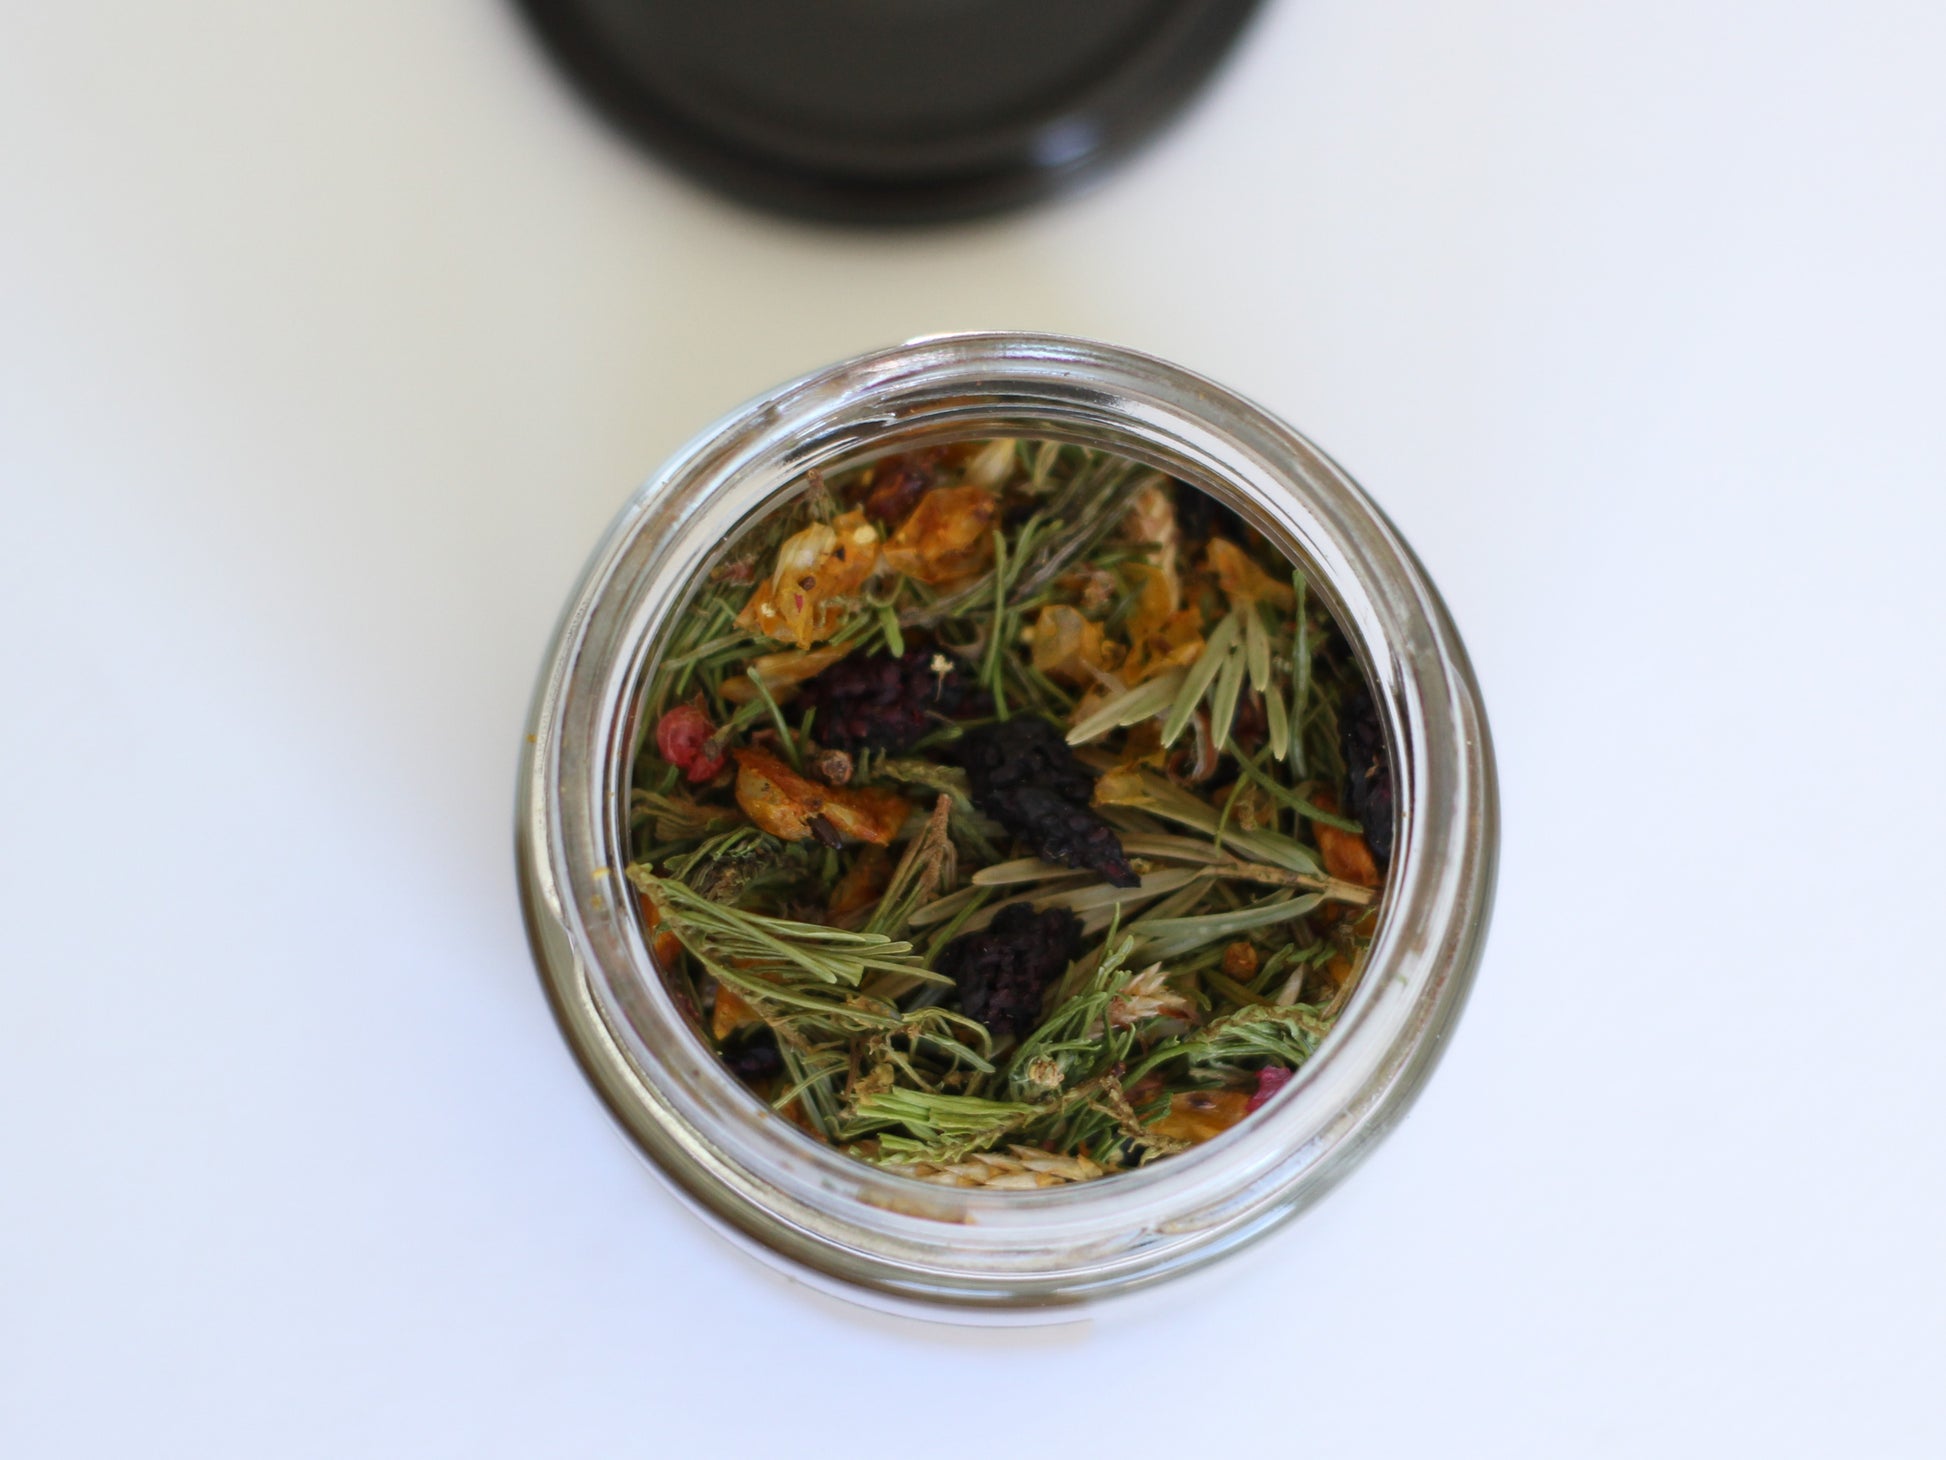 Ceai din plante in borcan